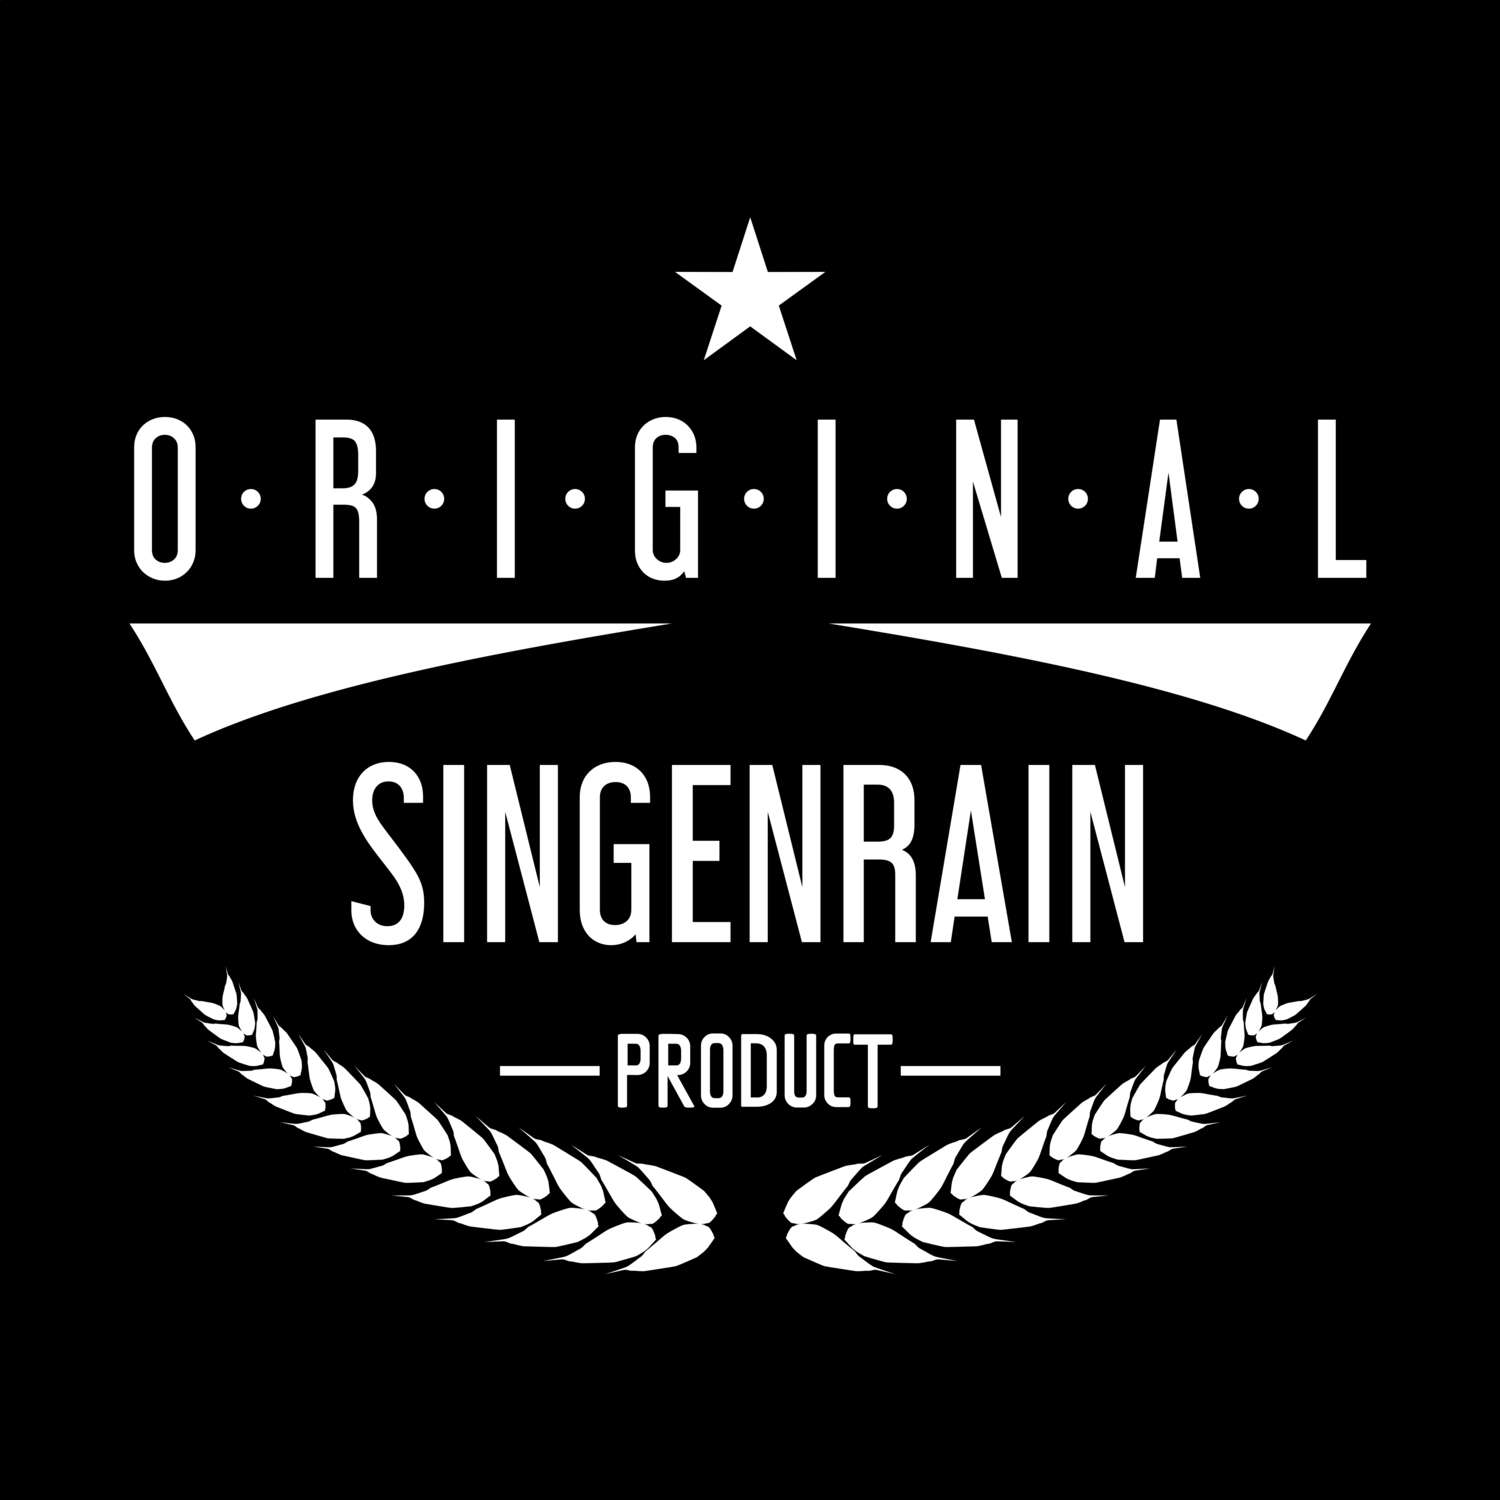 Singenrain T-Shirt »Original Product«